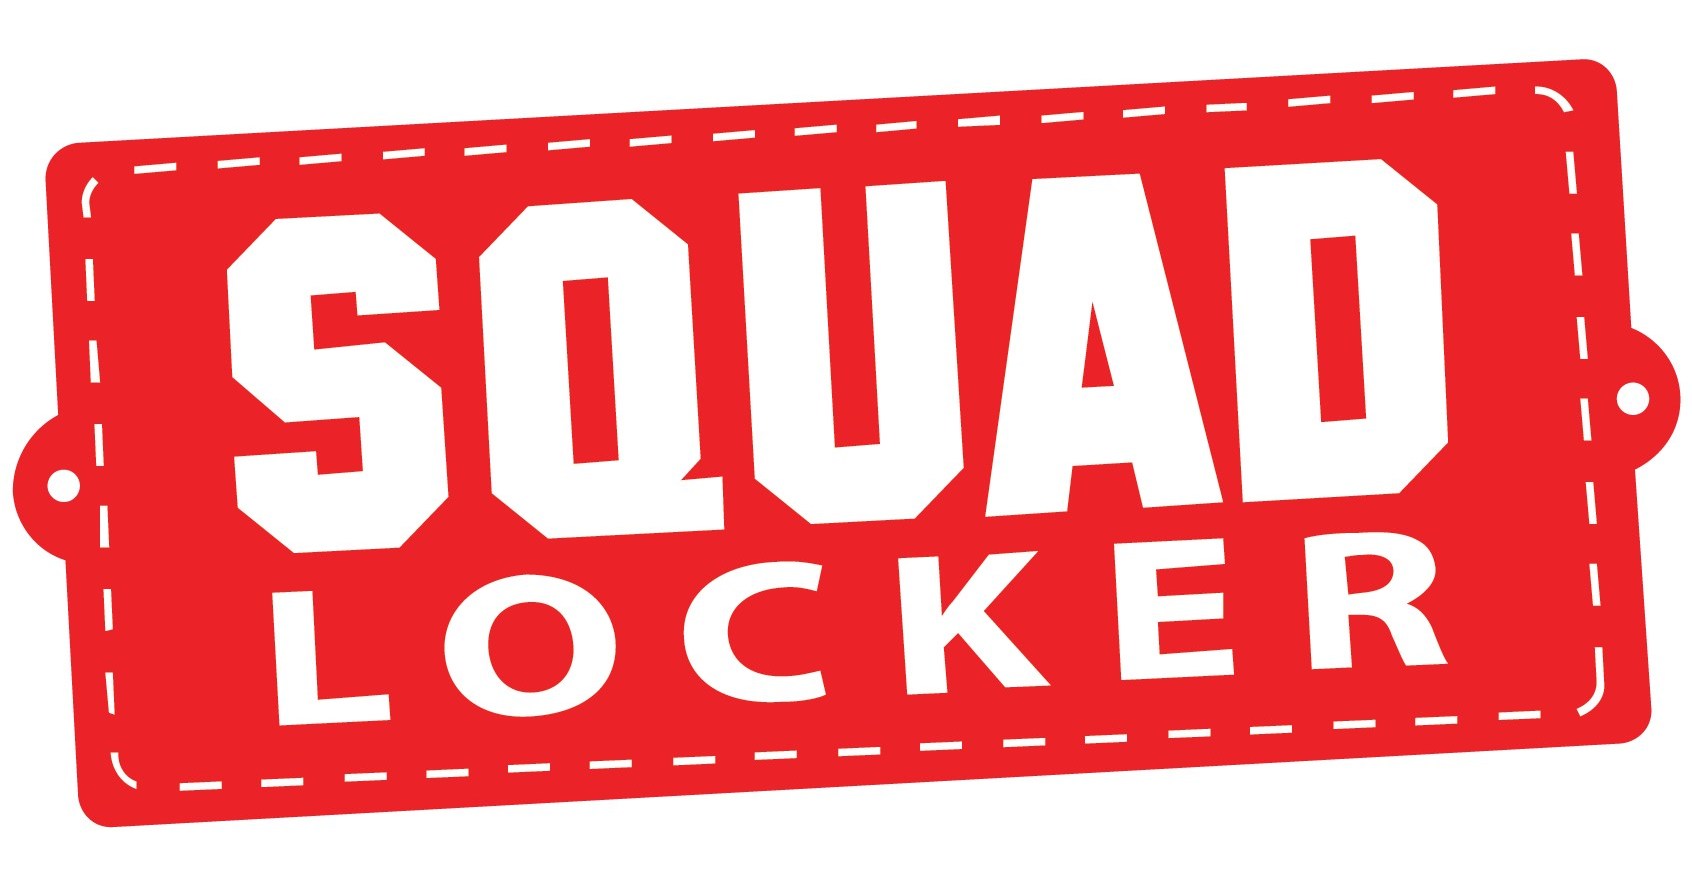 Squad Locker Logo